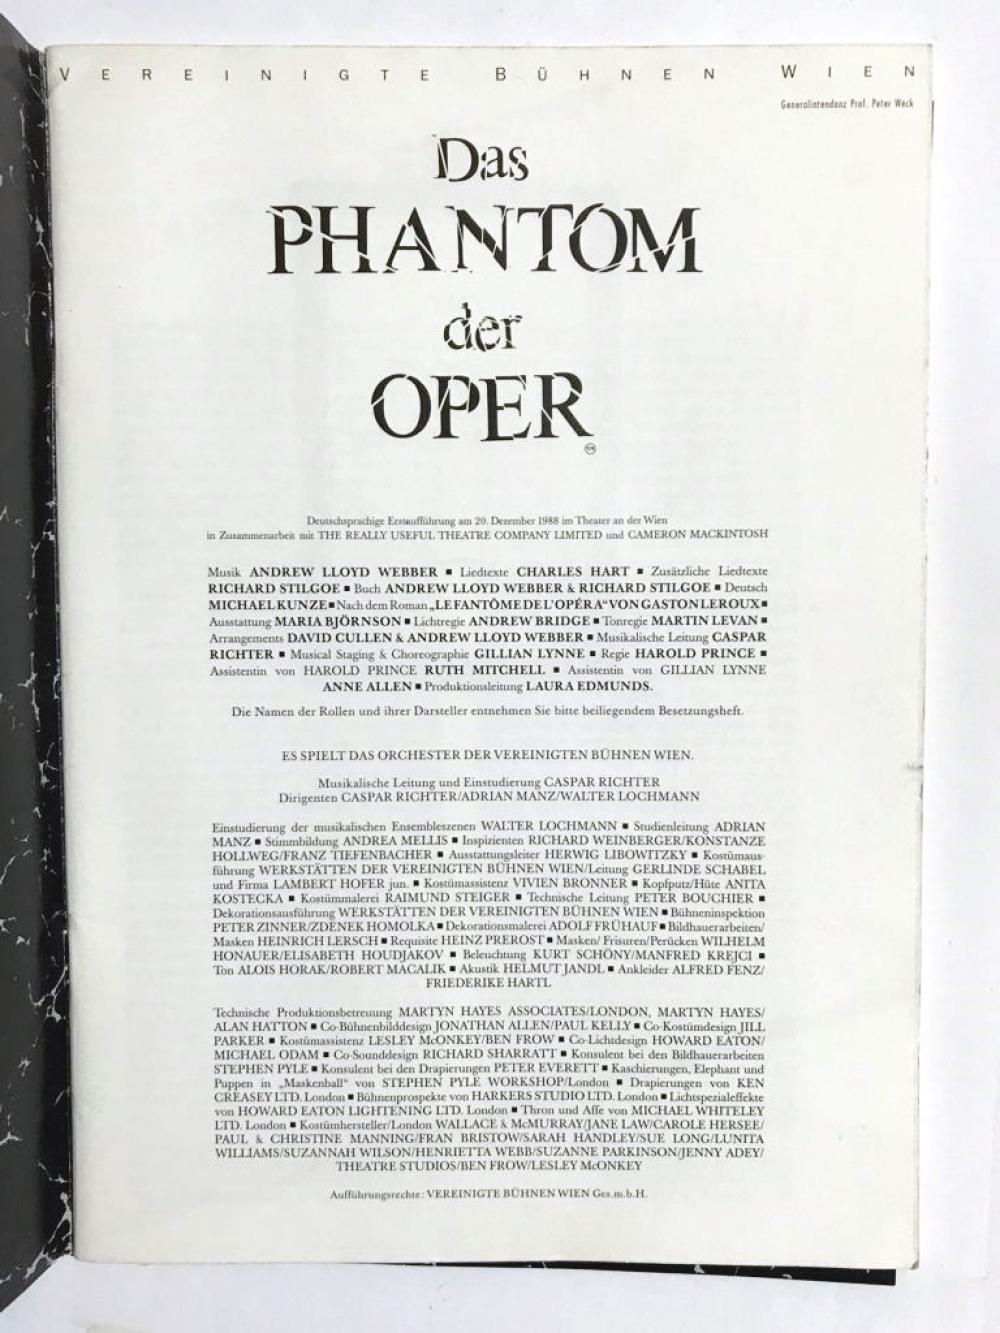 The Phantom of the Opera - Cd. broşür. afiş / 1992